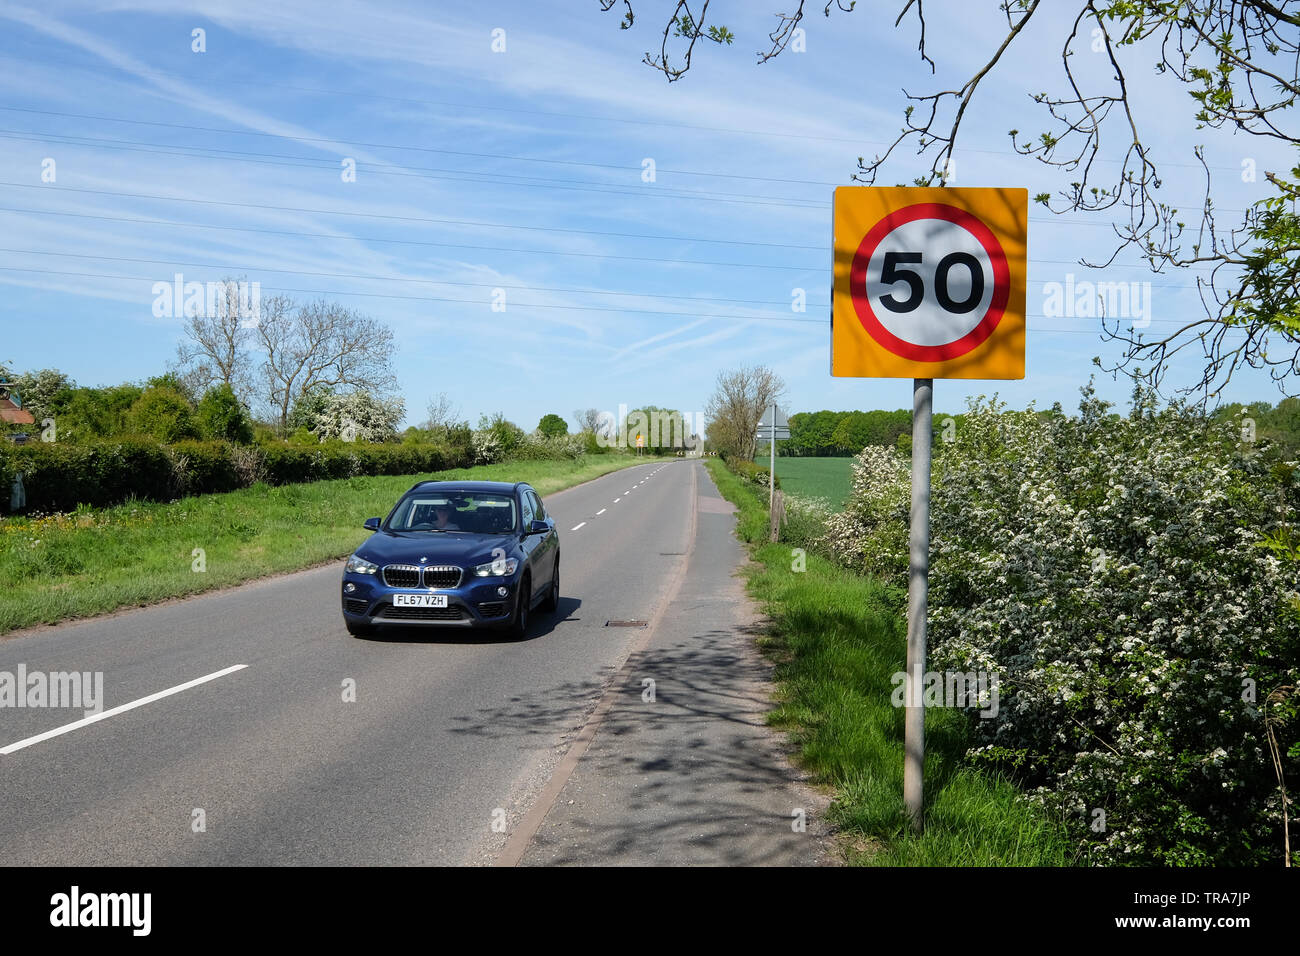 50 mph speed limit Stock Photo